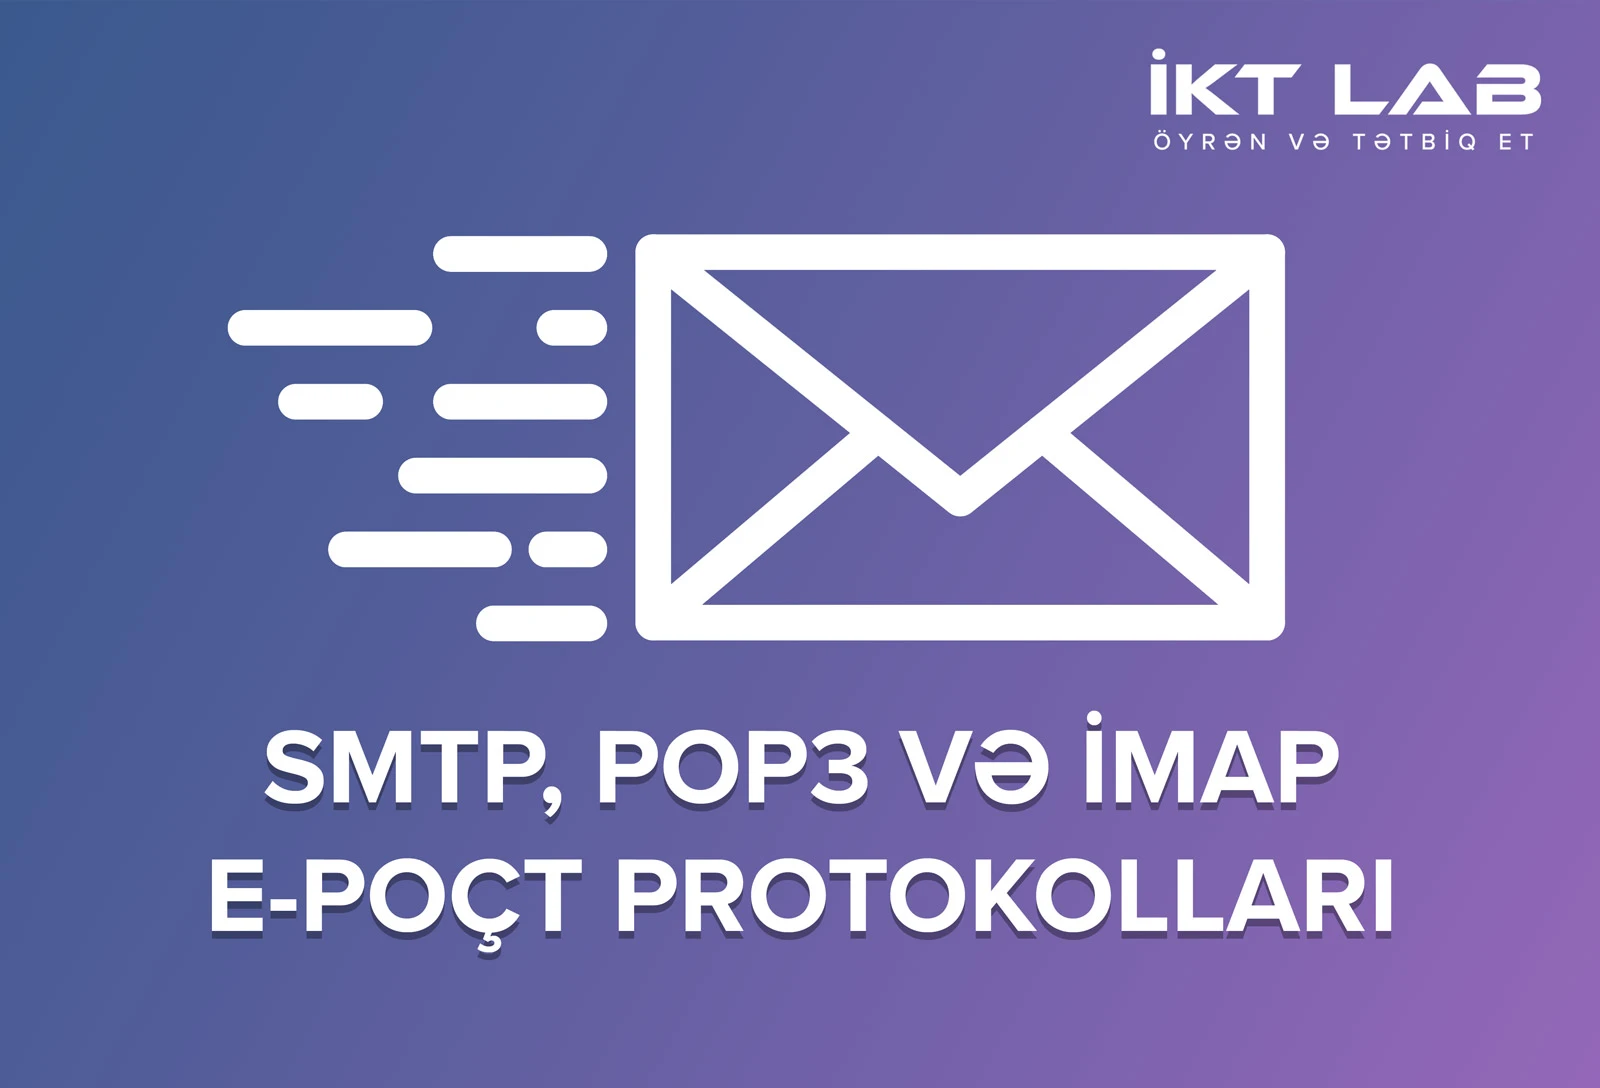 SMTP, POP3 VƏ IMAP E-POÇT PROTOKOLLARI